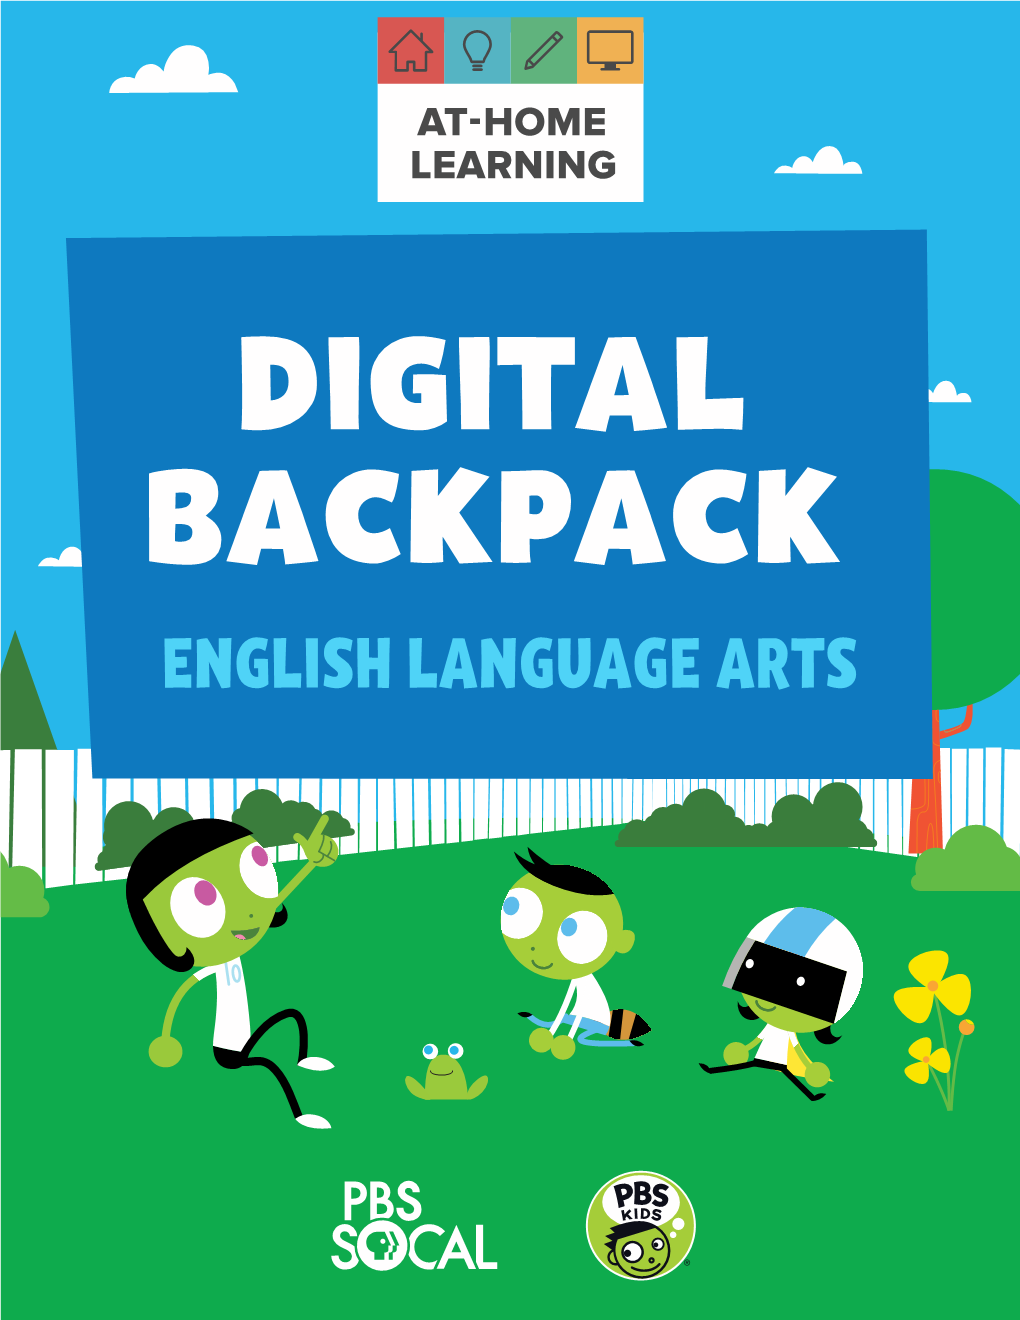 DIGITAL BACKPACK ENGLISH LANGUAGE ARTS Dear Parents and Caregivers